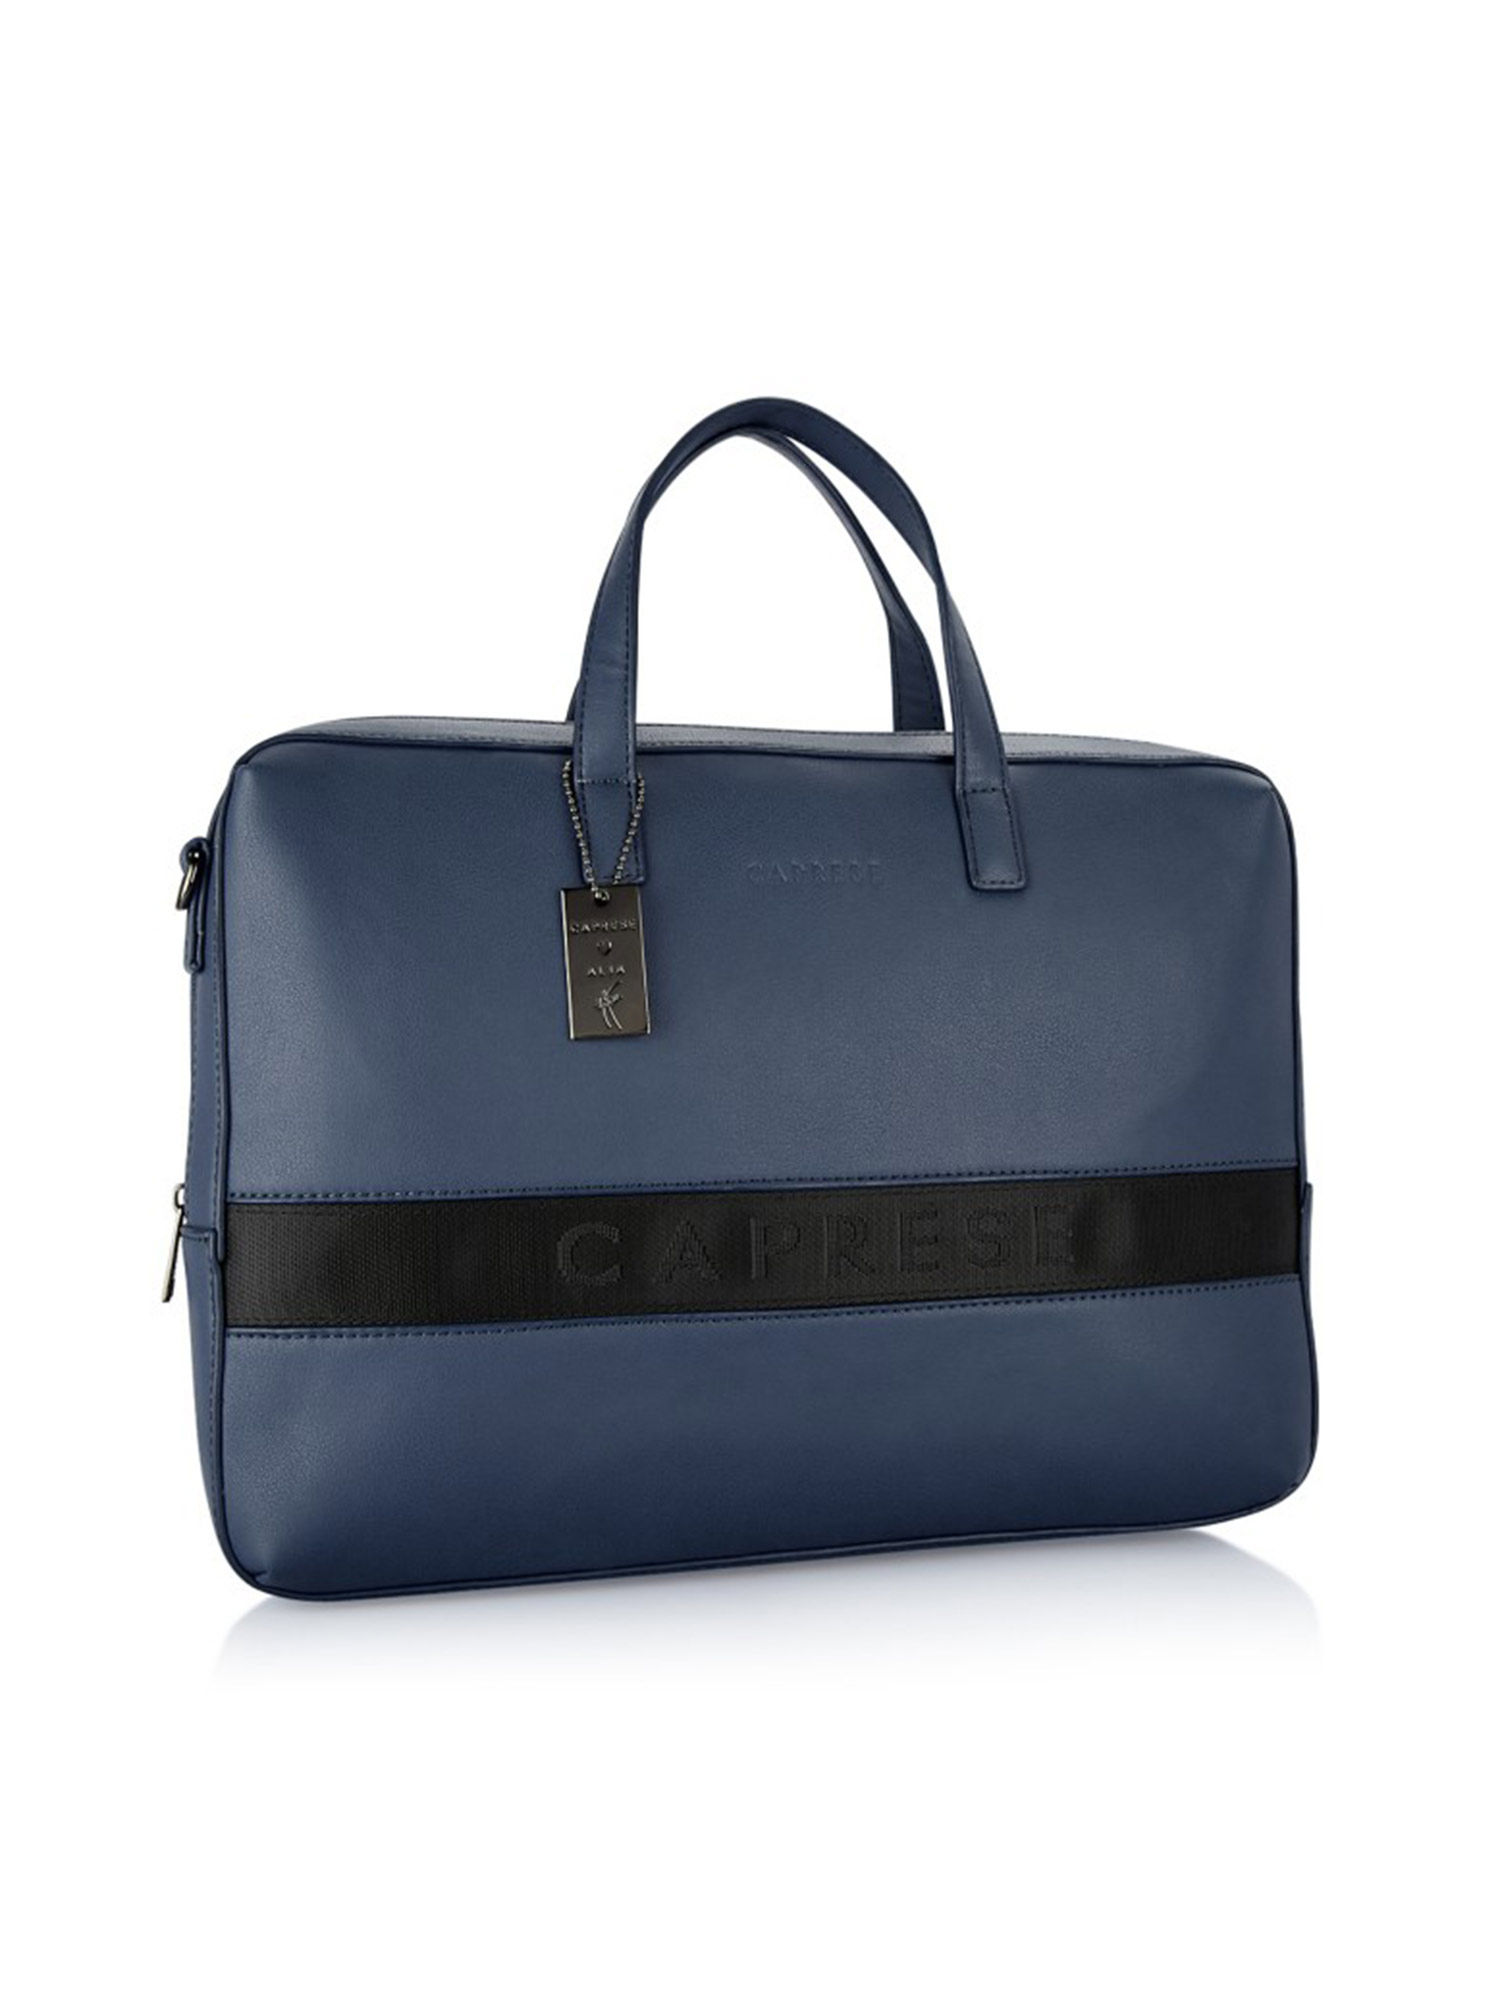 Caprese Kate Laptop Large Blue Satchel Bag: Buy Caprese Kate Laptop ...